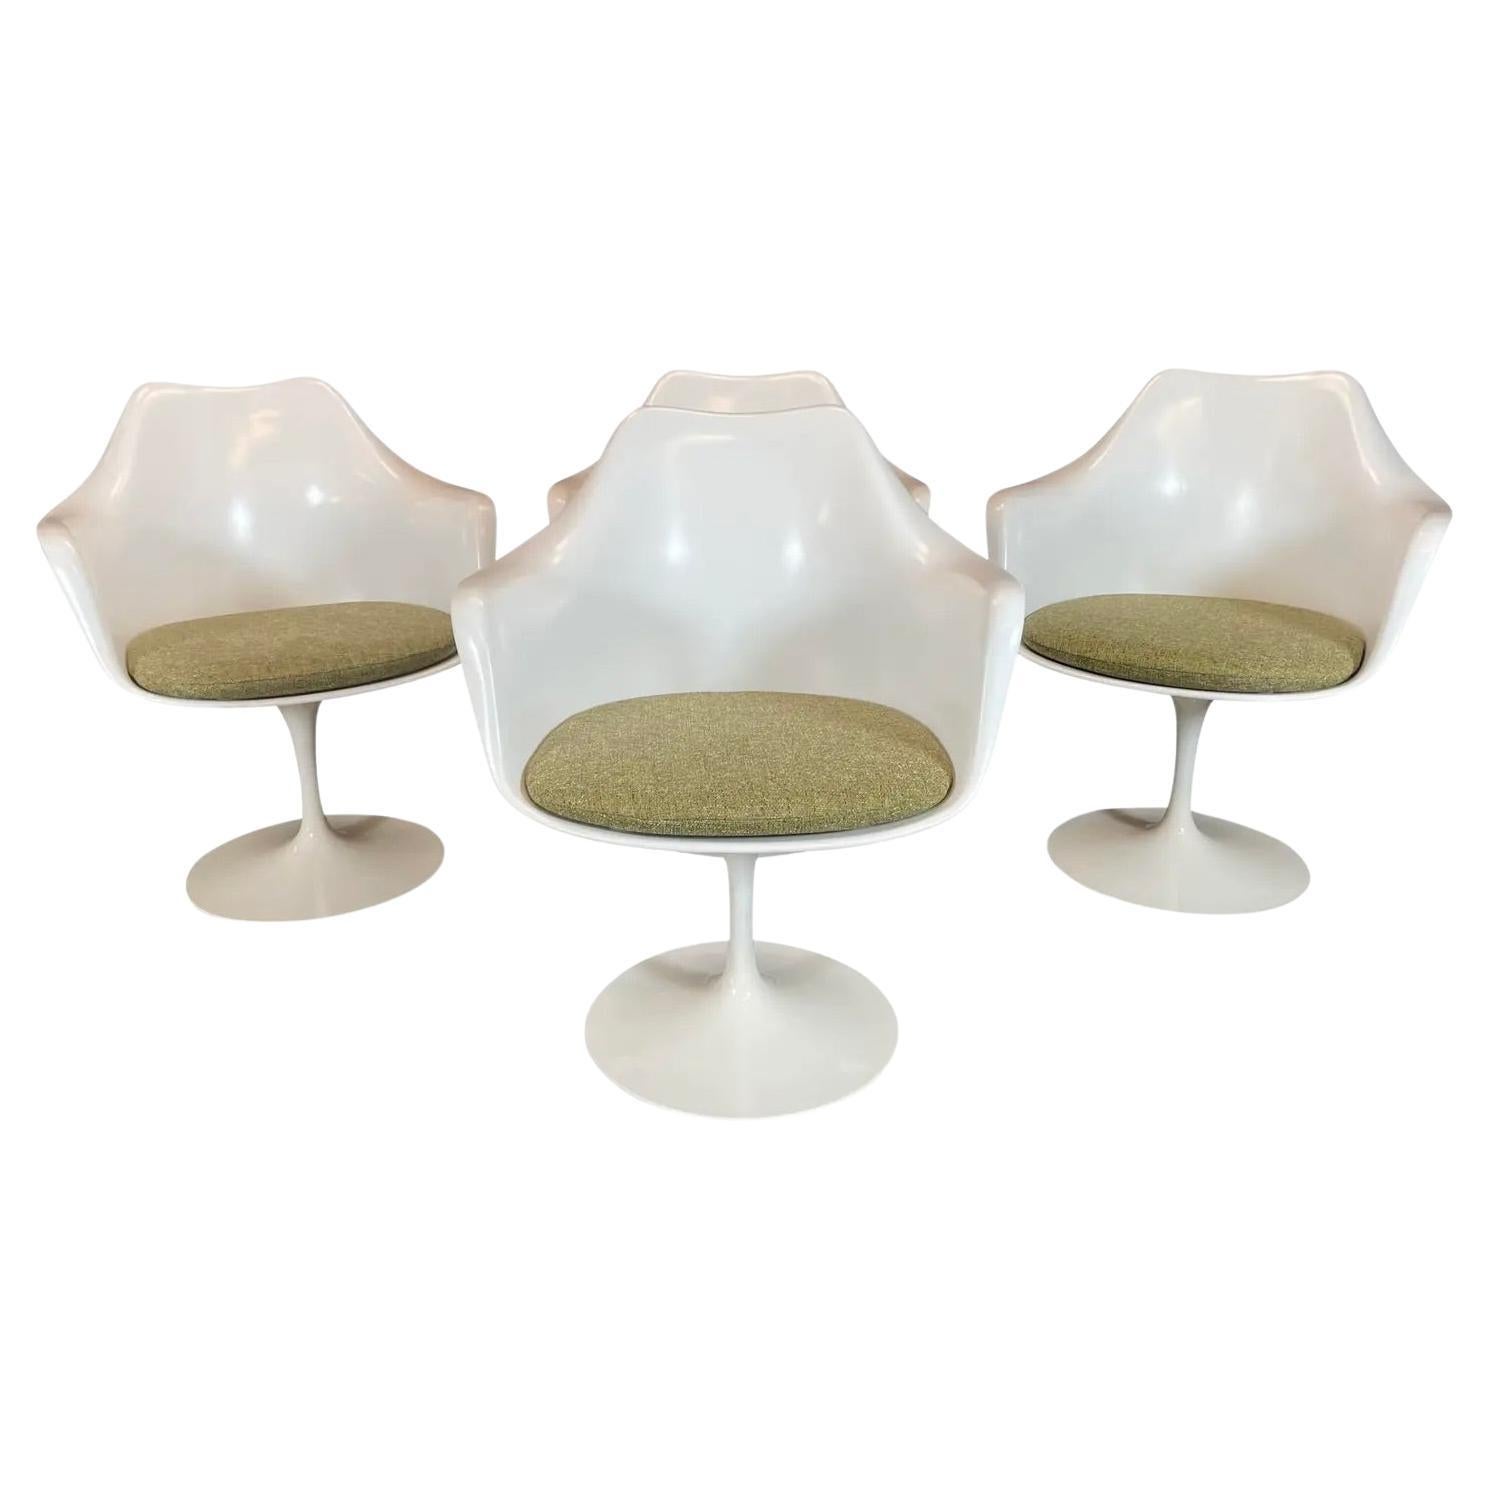 4 Vintage Mid Century Modern Swivel "Tulip" Chairs by Eero Saarinen for Knoll For Sale